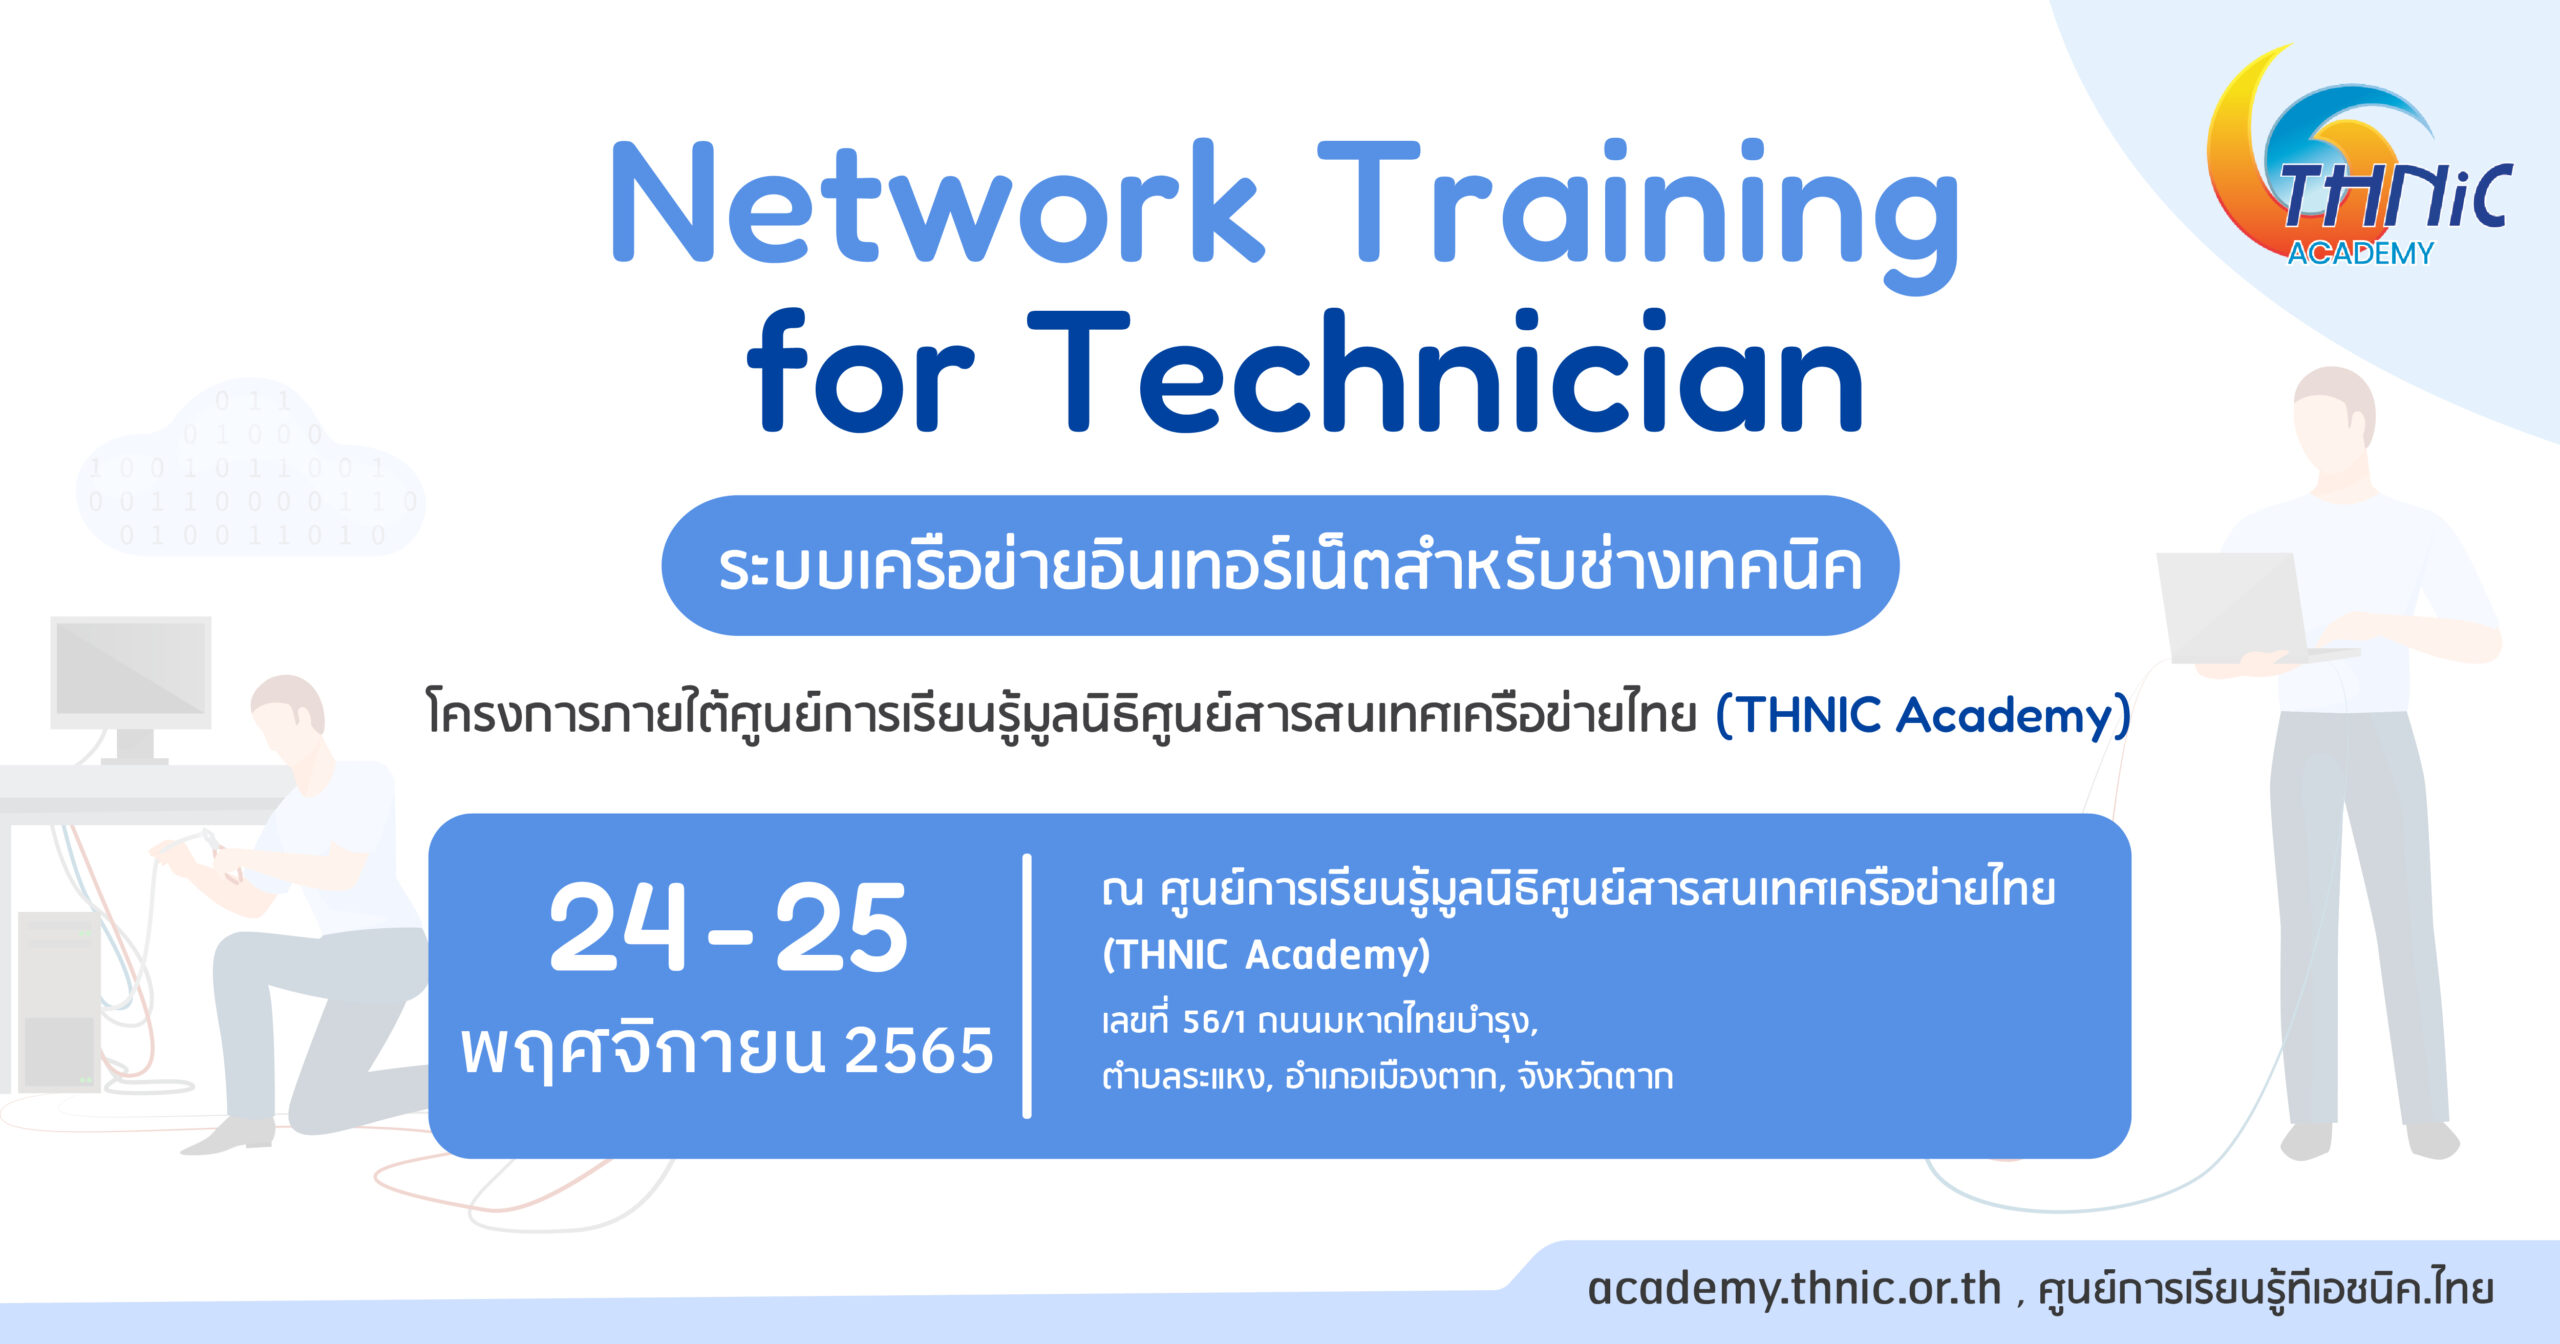 Network Training for Technician